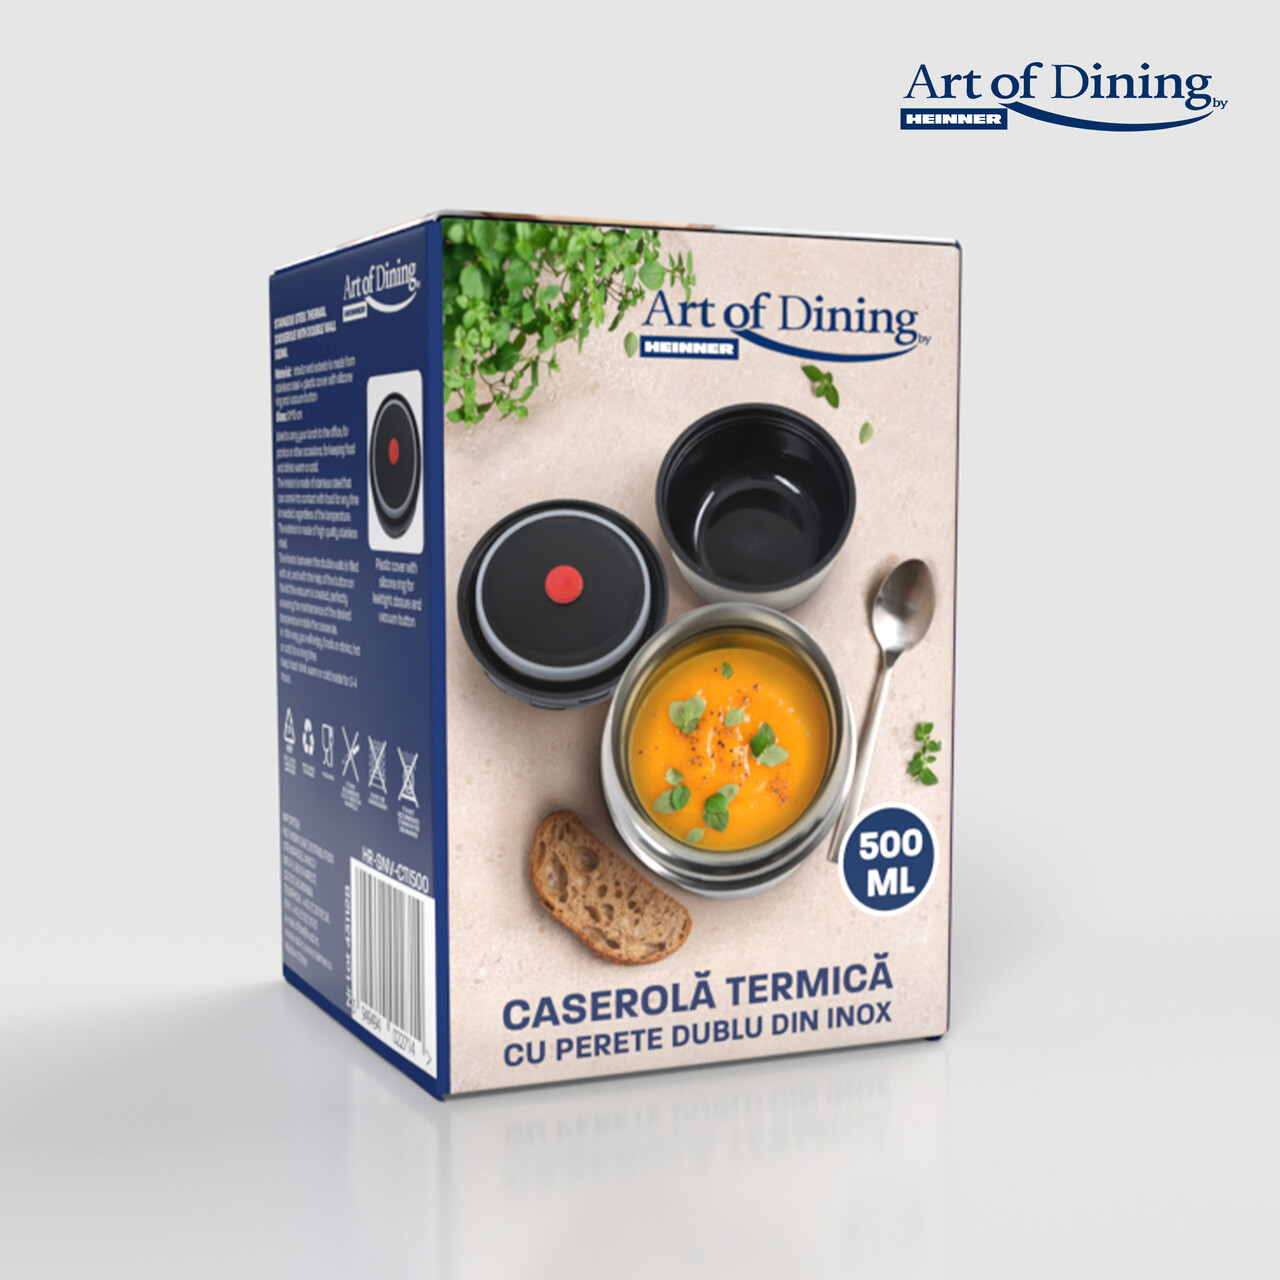 Caserola termica Art of Dining, 500 ml, inox, argintiu